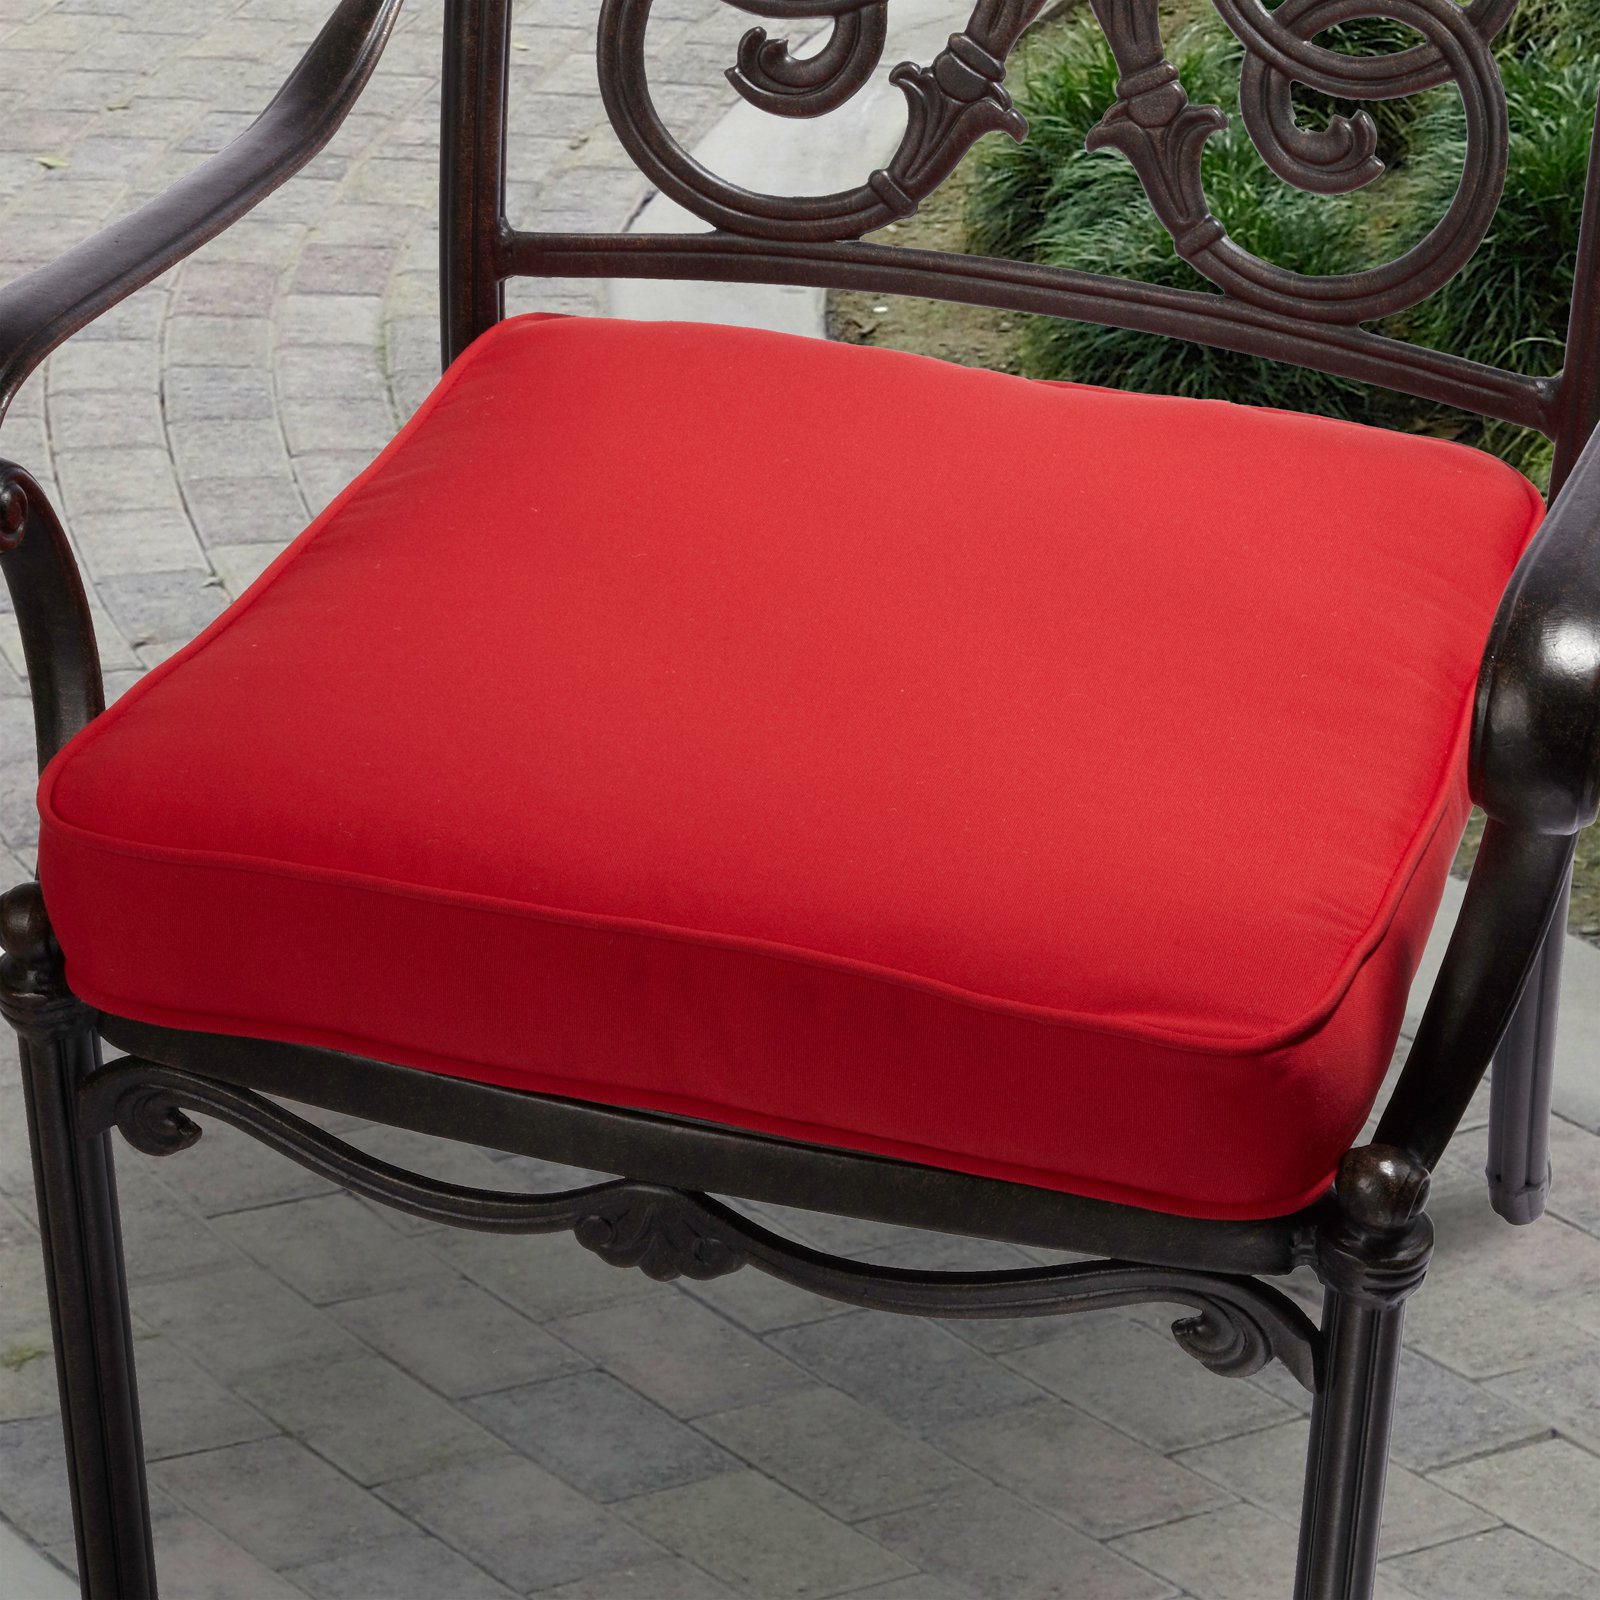 Mozaic Company Sunbrella Corded Indoor/Outdoor Chair Cushion - image 1 of 3